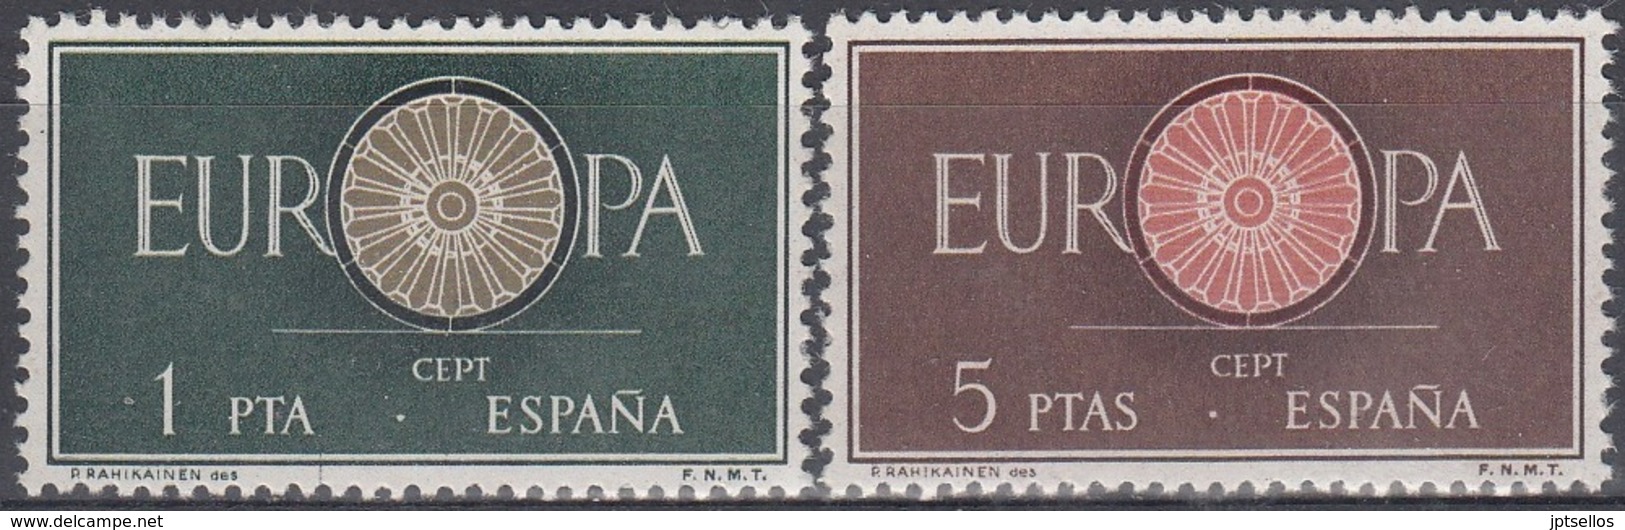 ESPAÑA 1960 Nº 1294/1295 NUEVO PERFECTO - Used Stamps